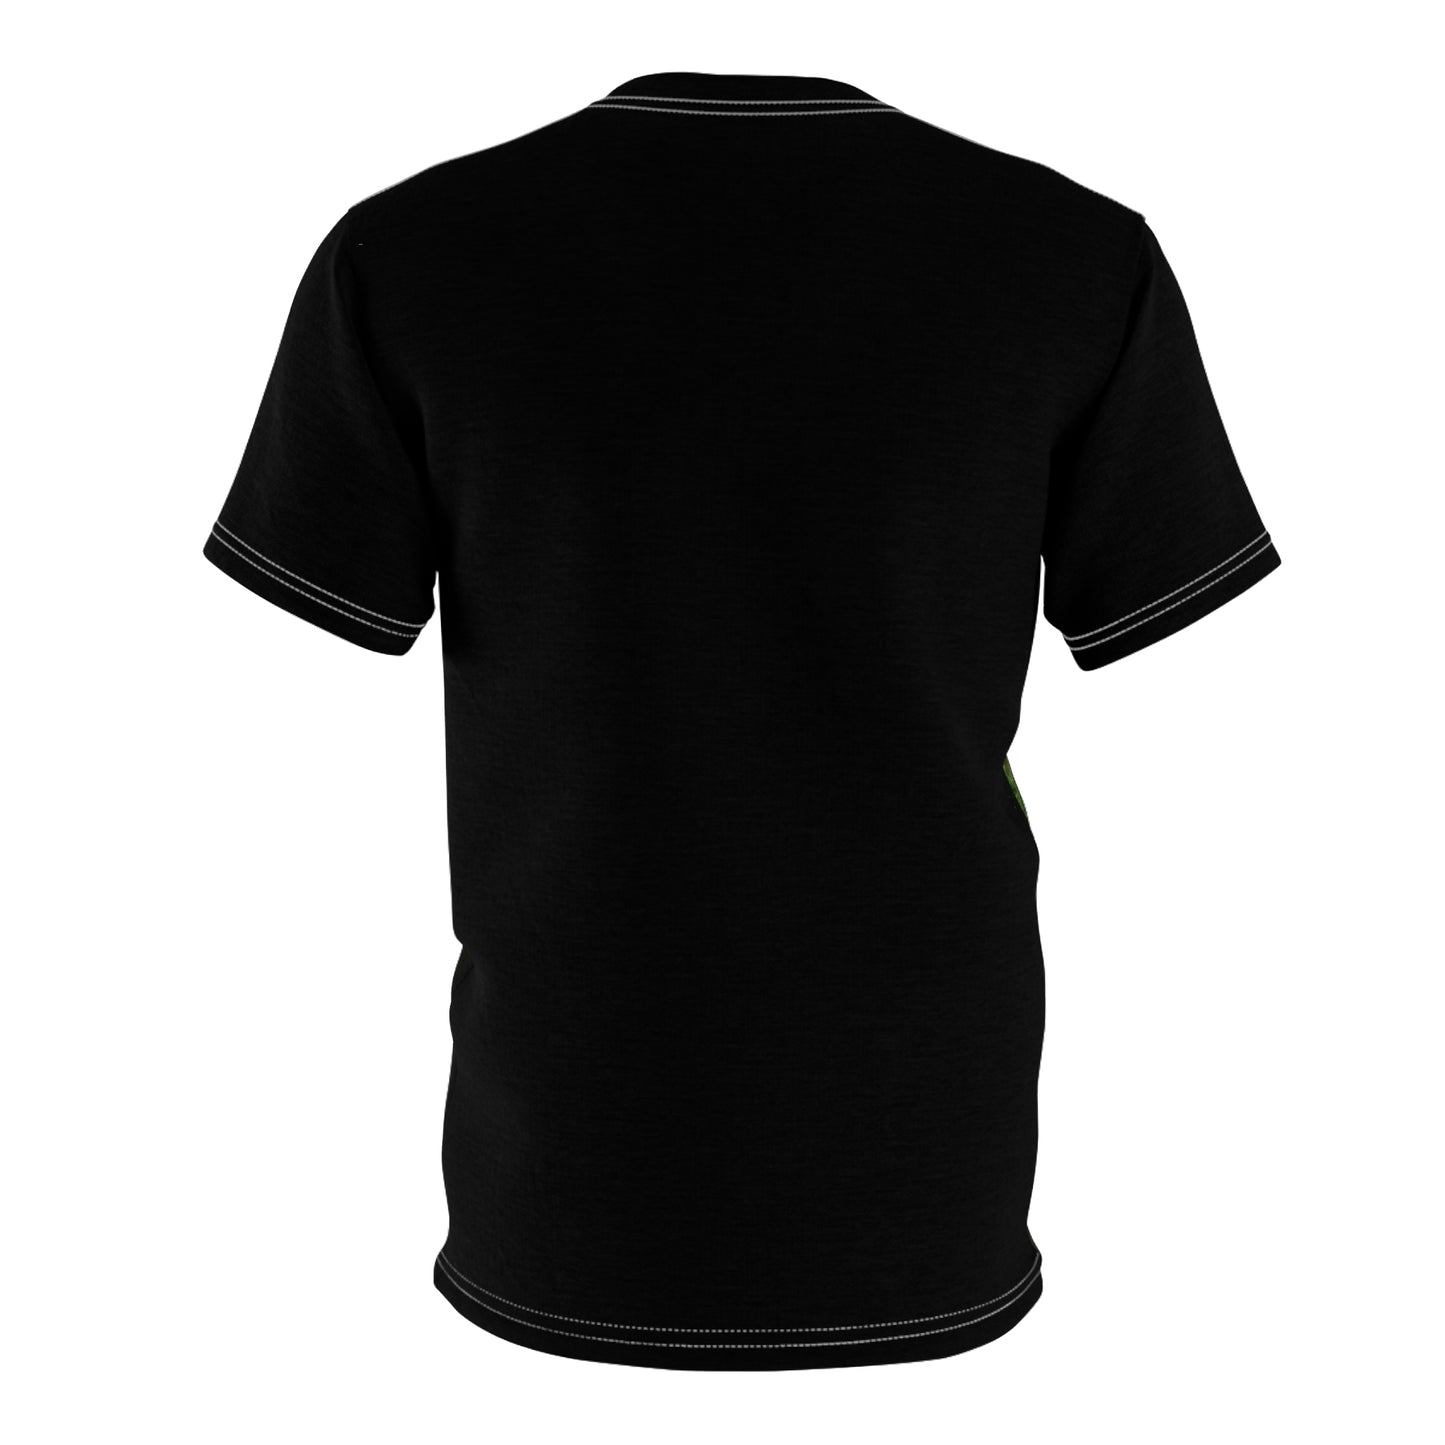 Kingmaker - Unisex All-Over Print Cut & Sew T-Shirt